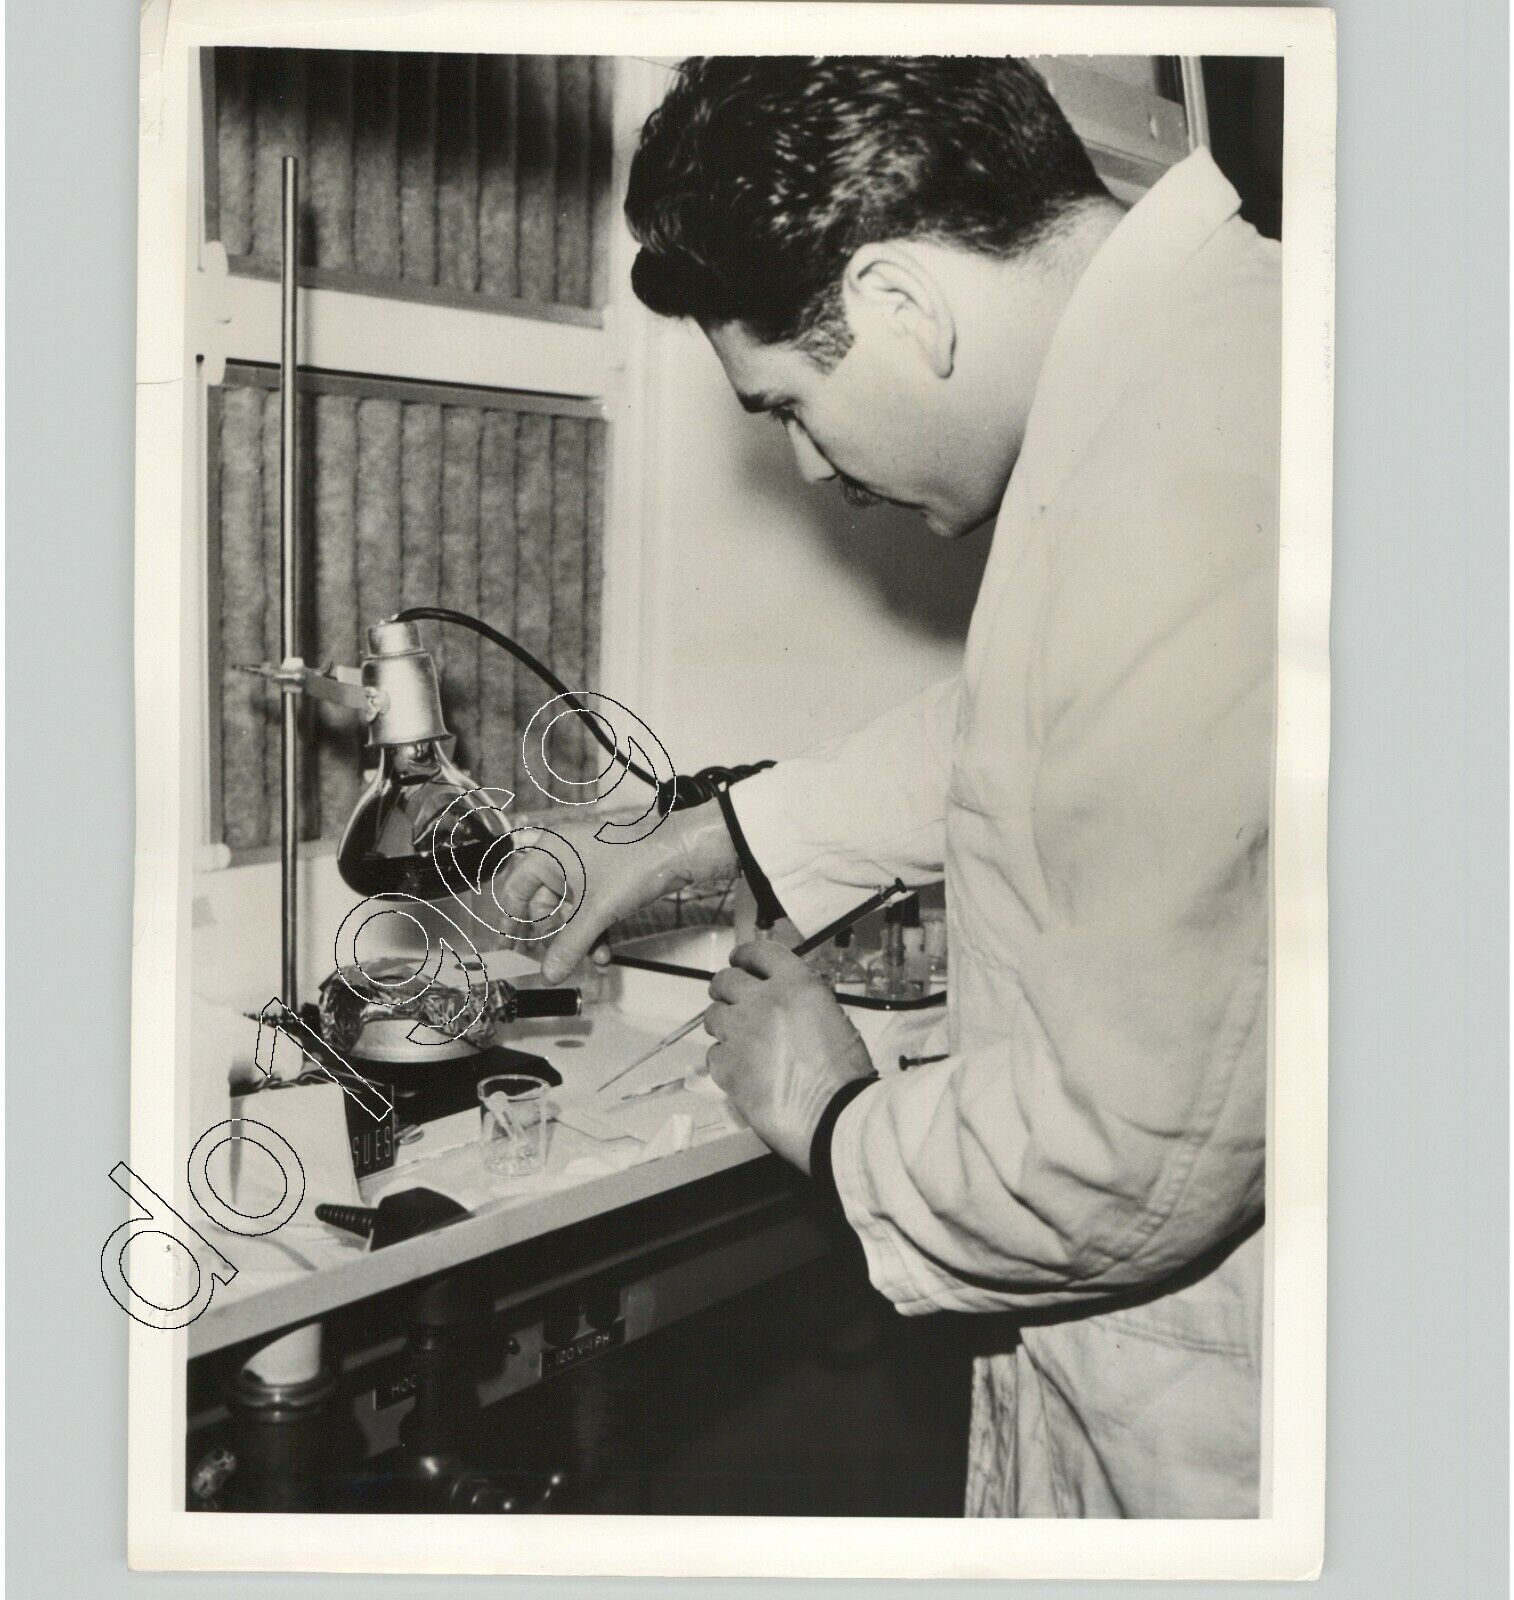 SCIENTIST Tests Radioactive Chemical Sample, Atomic Lab, Vtg. 1955 Press Photo